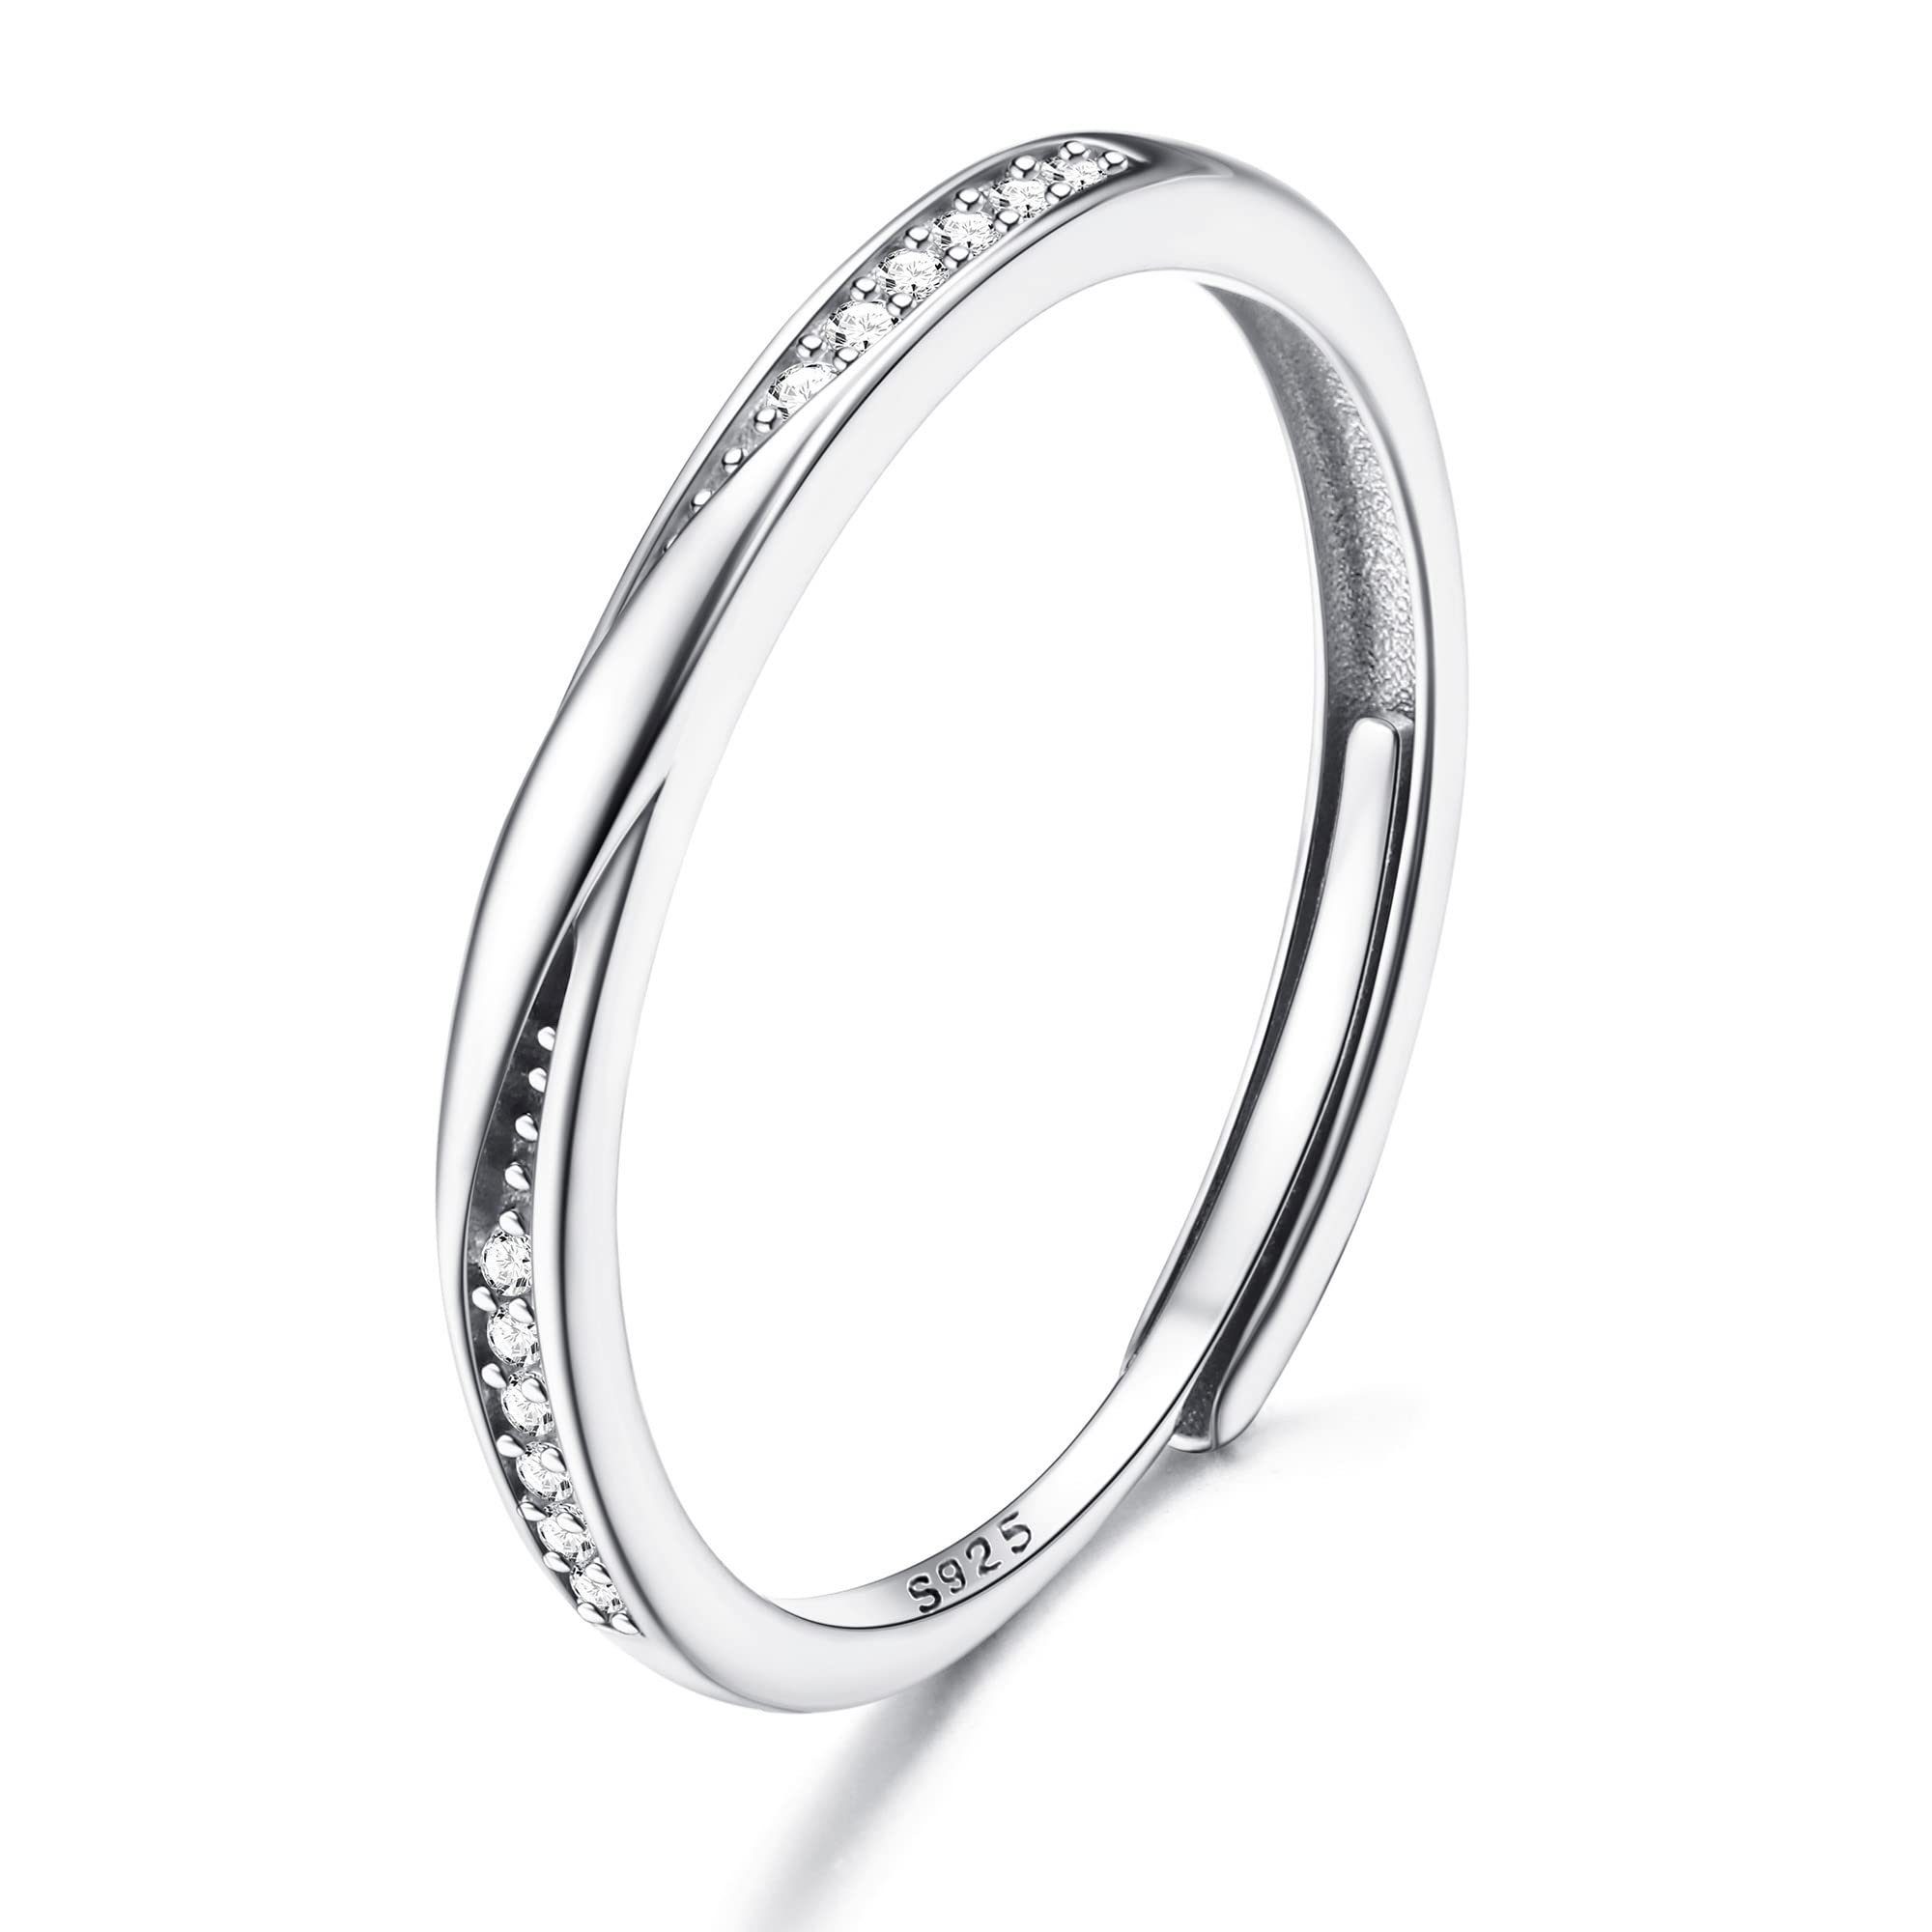 POCHUMIDUU Fingerring 925 Silber Verstellbarer Damen Mode Trend Ring, Silberschmuck für Frauen aus 925er Sterlingsilber